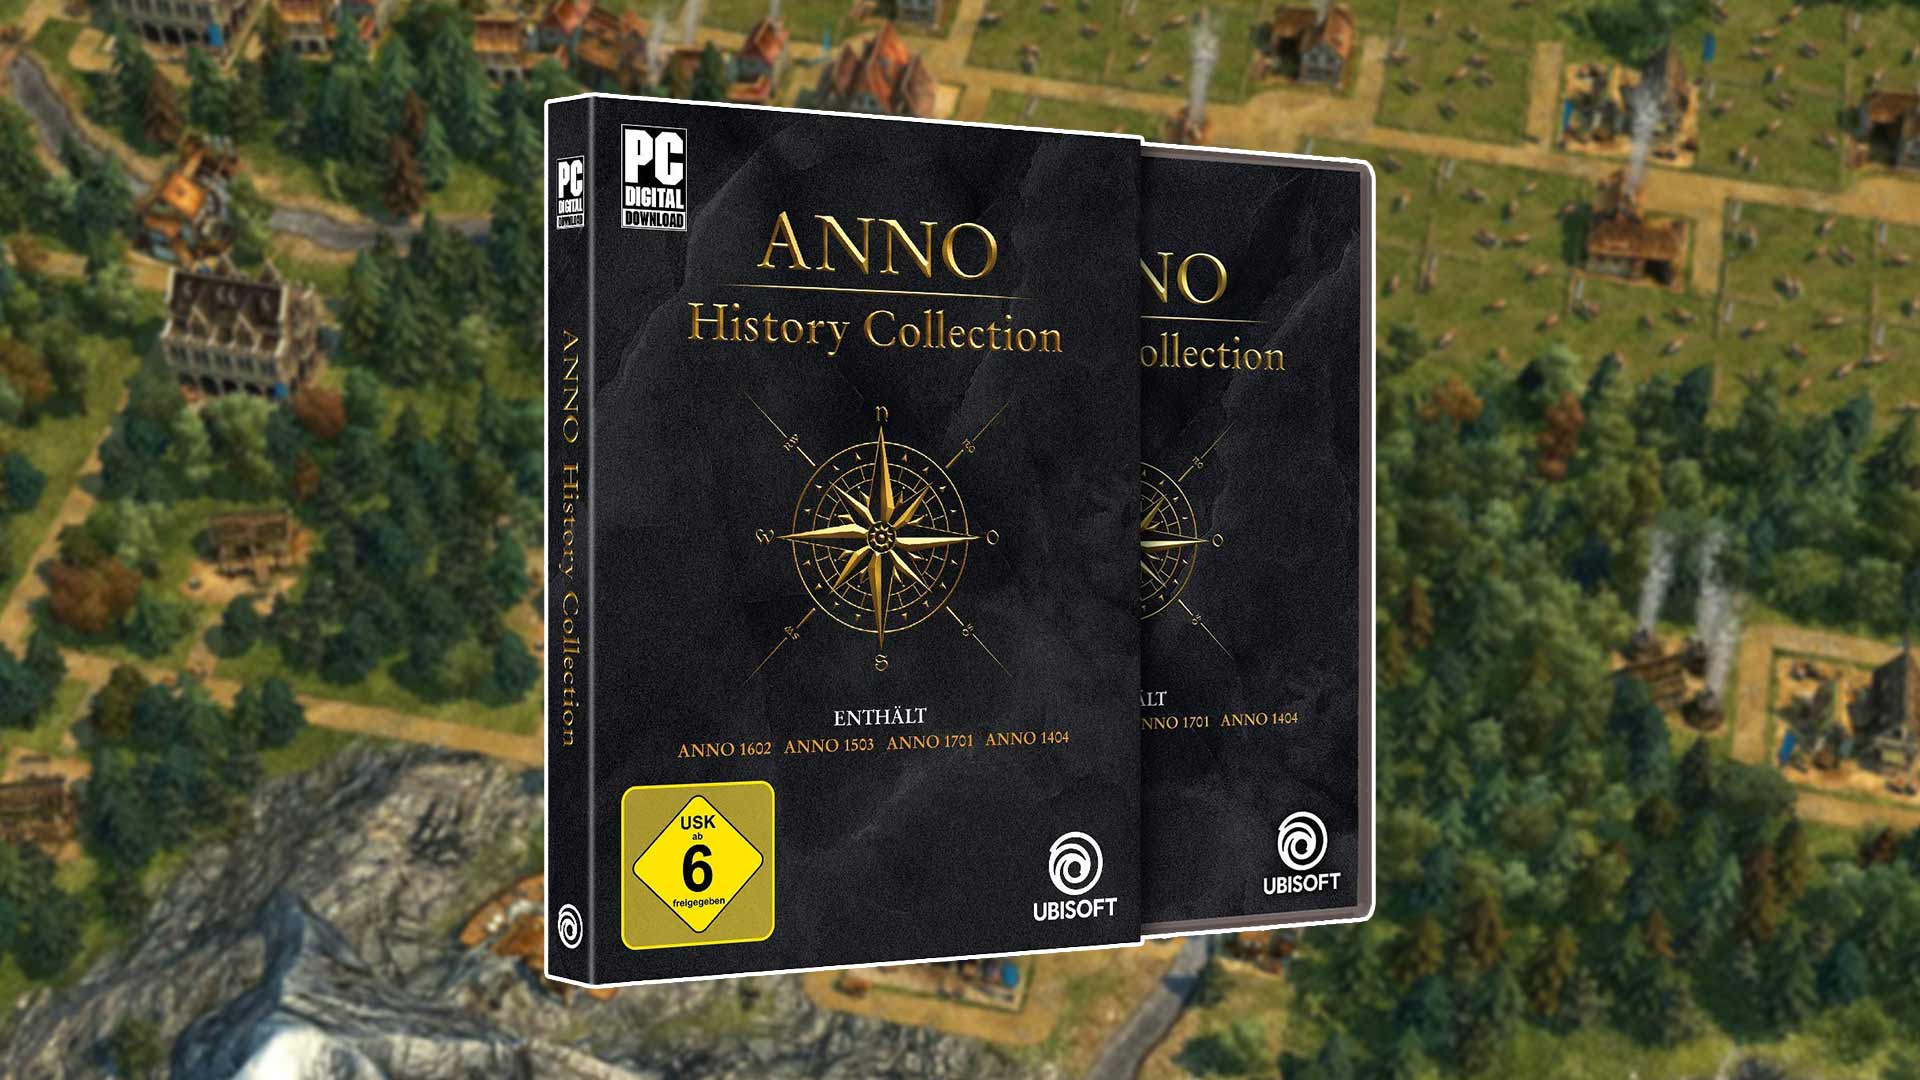 Euro History Amazon jetzt 15 mit Collection Rabatt Angebot: Anno